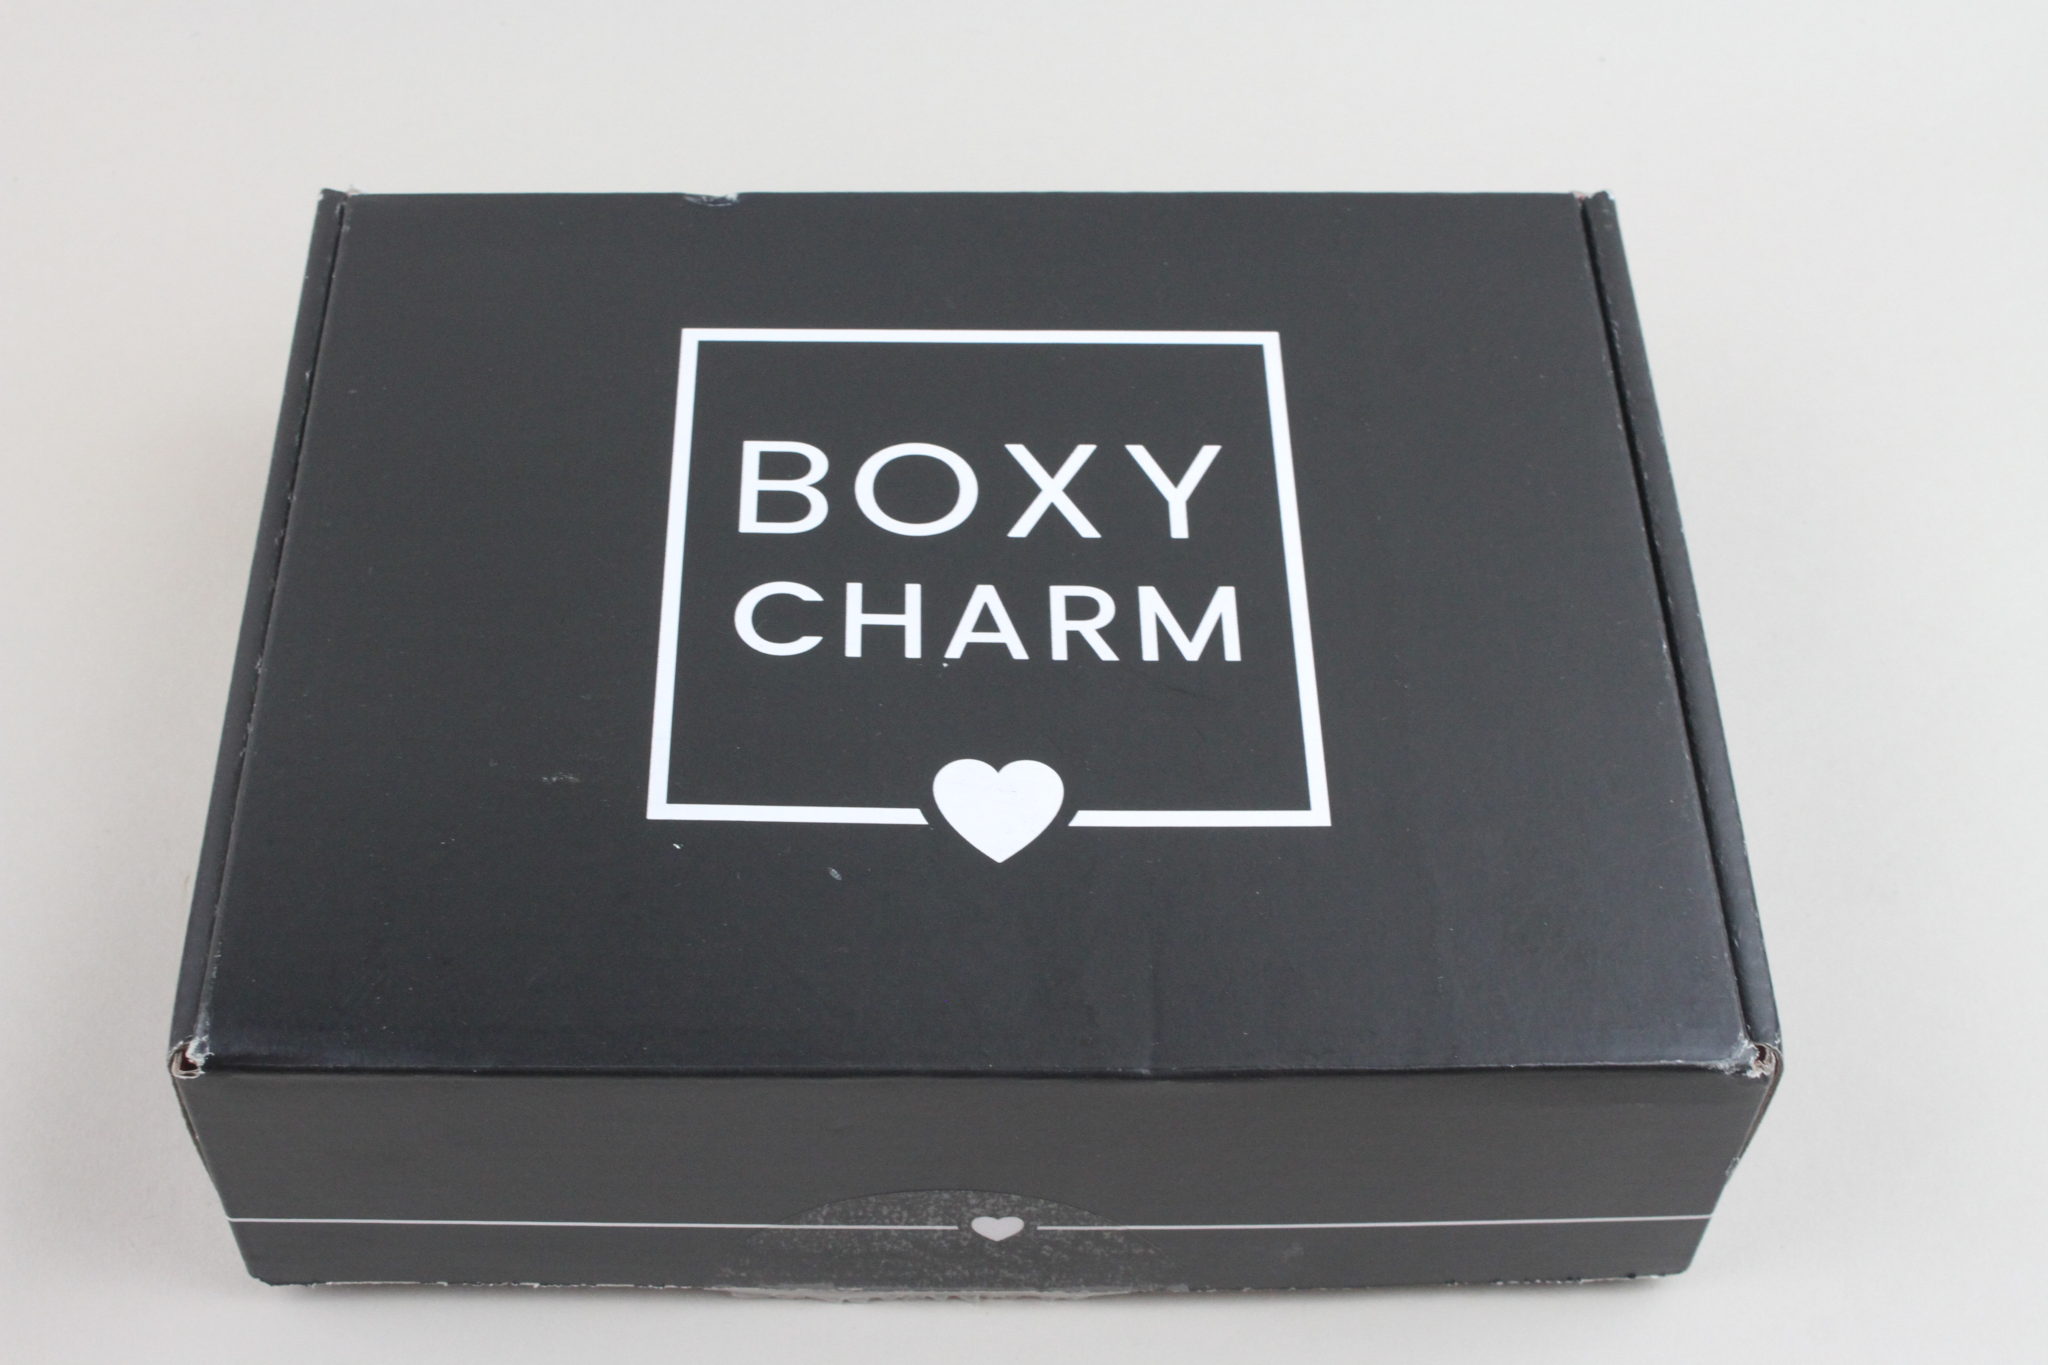 Boxycharm Box. Review box